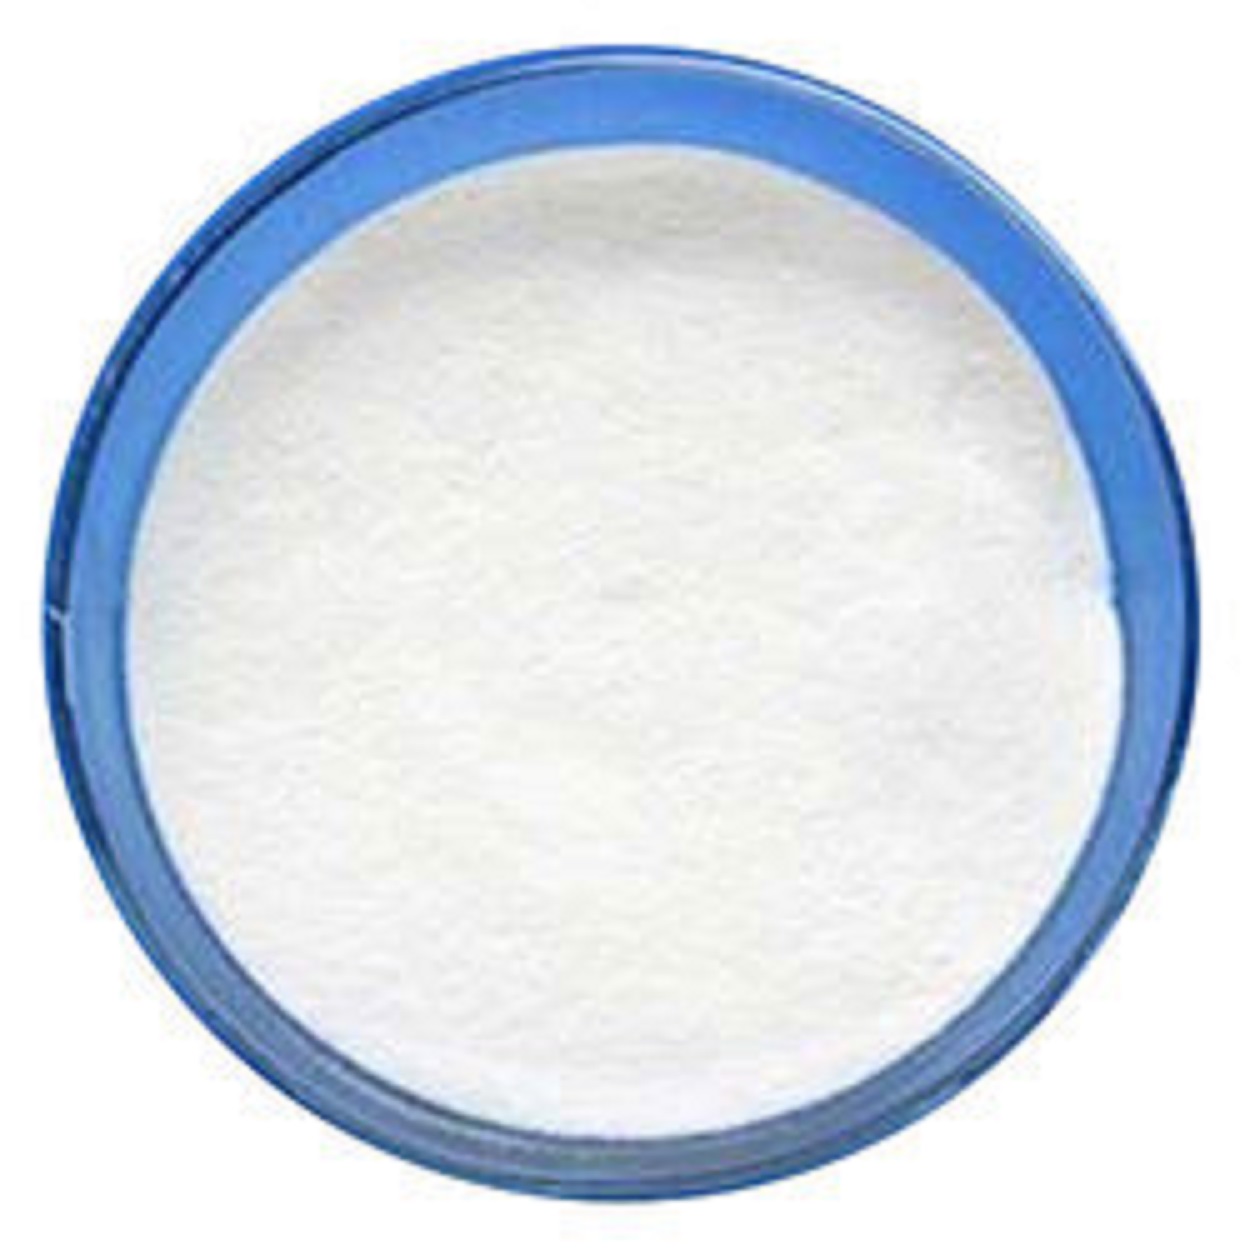 Lactic Acid Bacillus Raw Material Powder Price - Wholesale Supplier ...